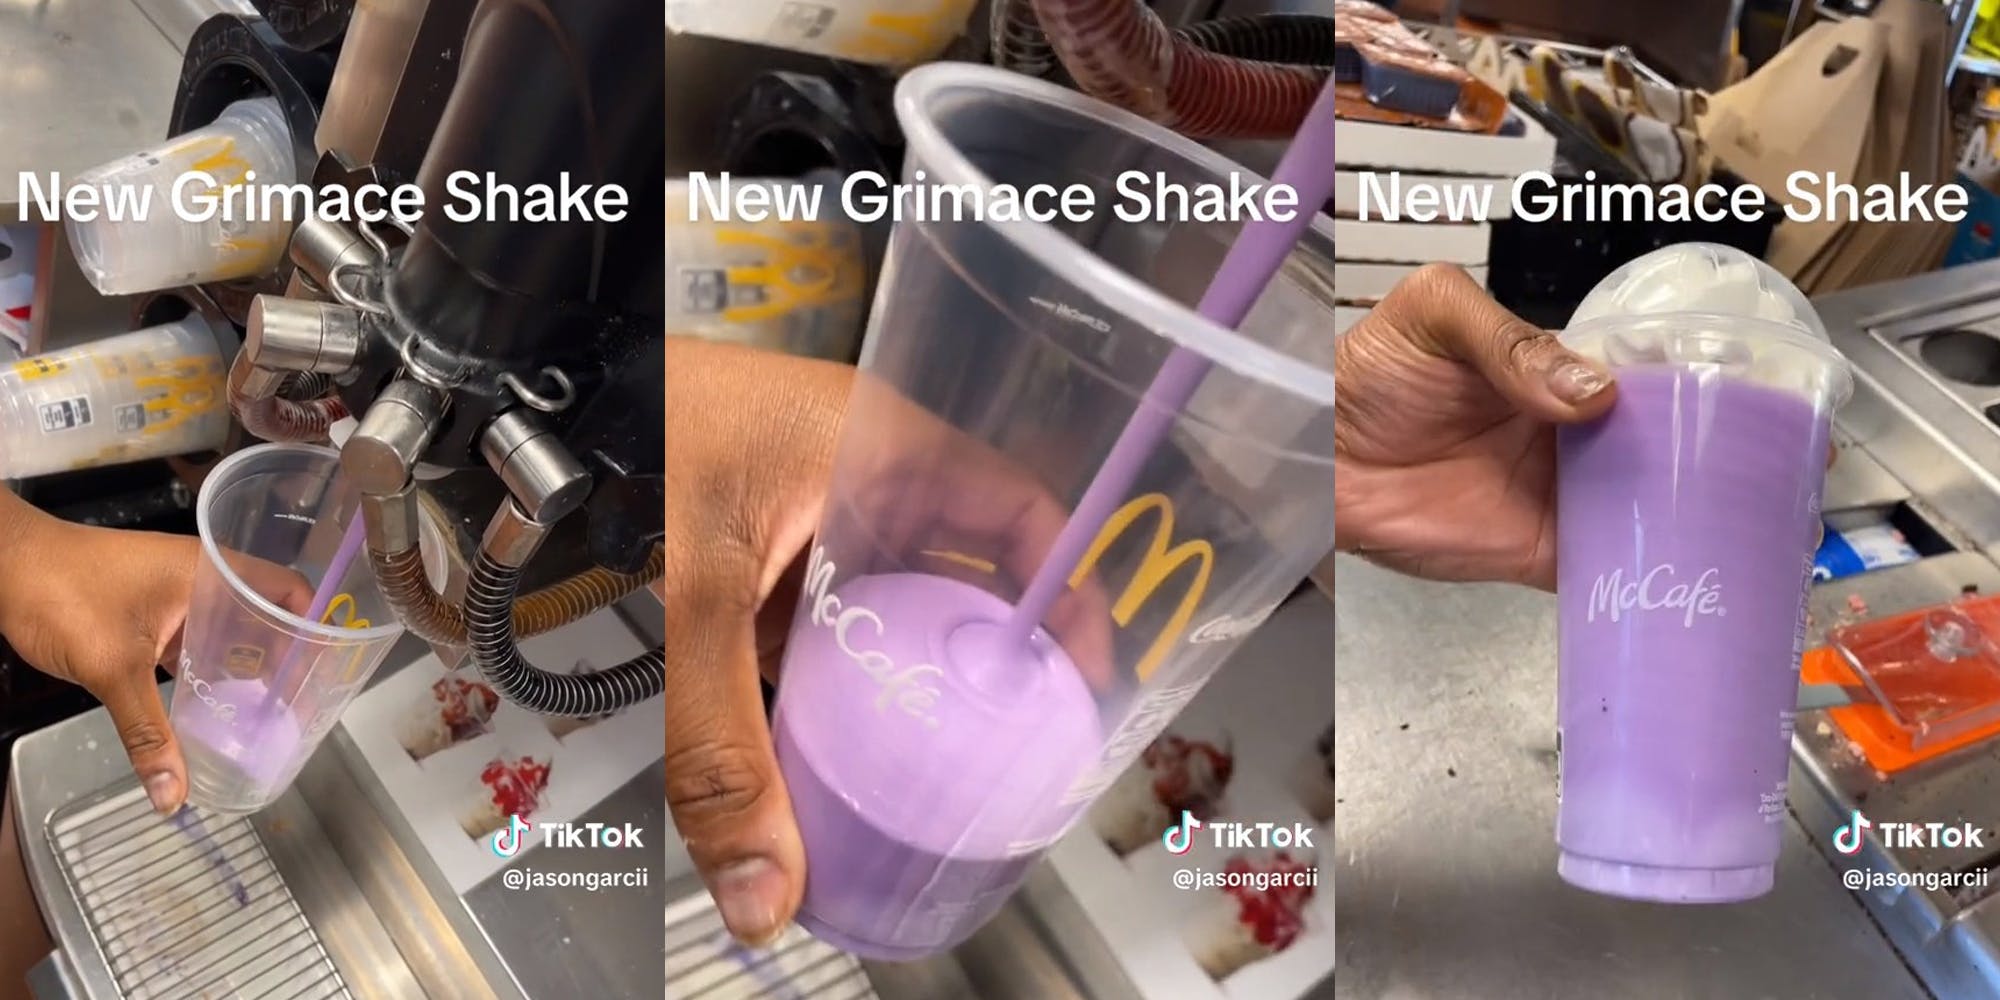 Mcdonalds Grimace Shake Tiktok Trend Viral What Does The Shake Taste Like Vo Truong Toan 2298